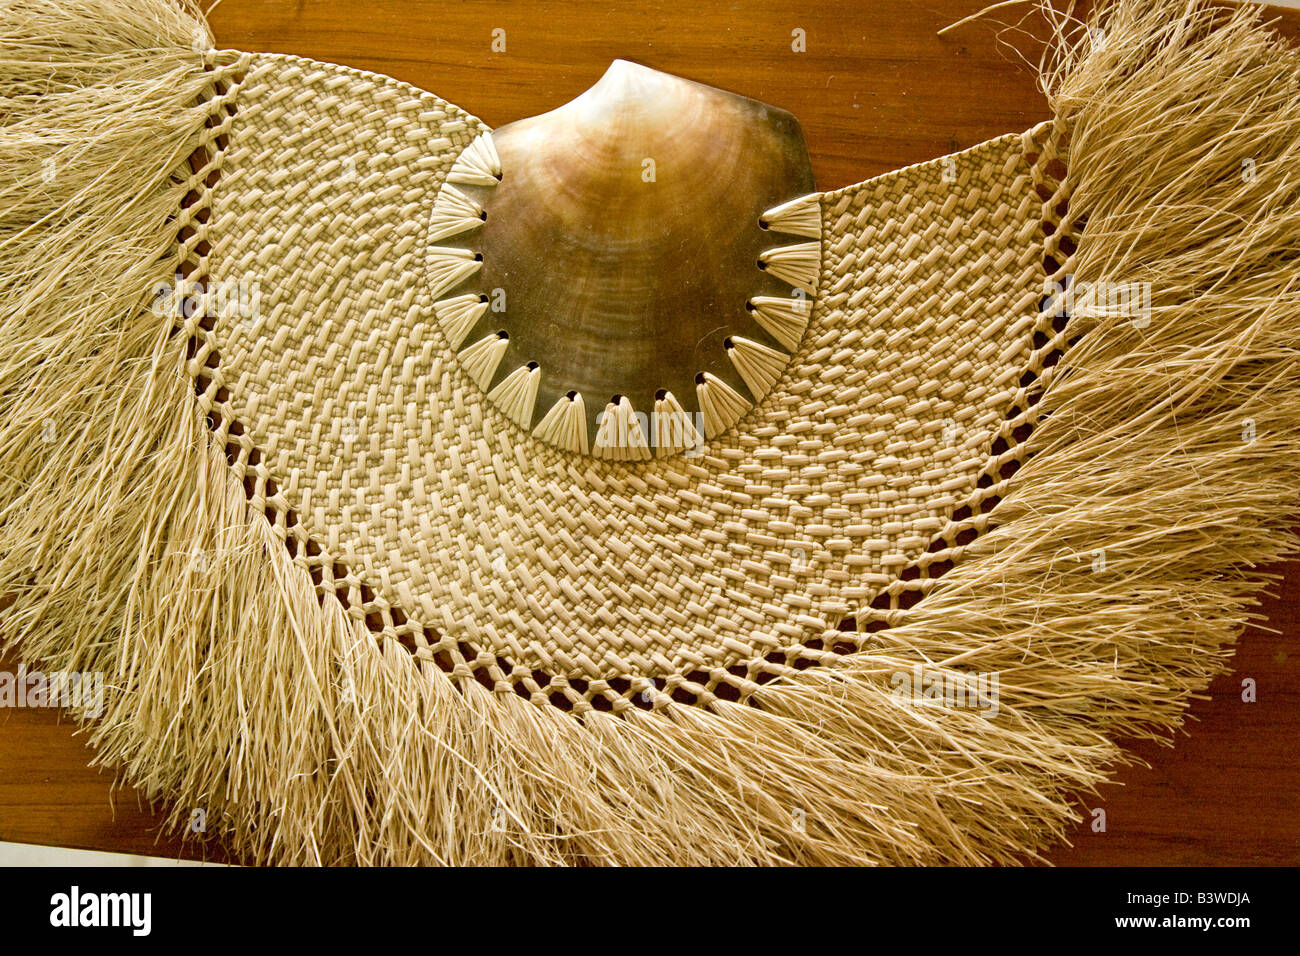 Oceania, Fiji, Lautoka. Traditional fan made of woven grass and shell. Stock Photo